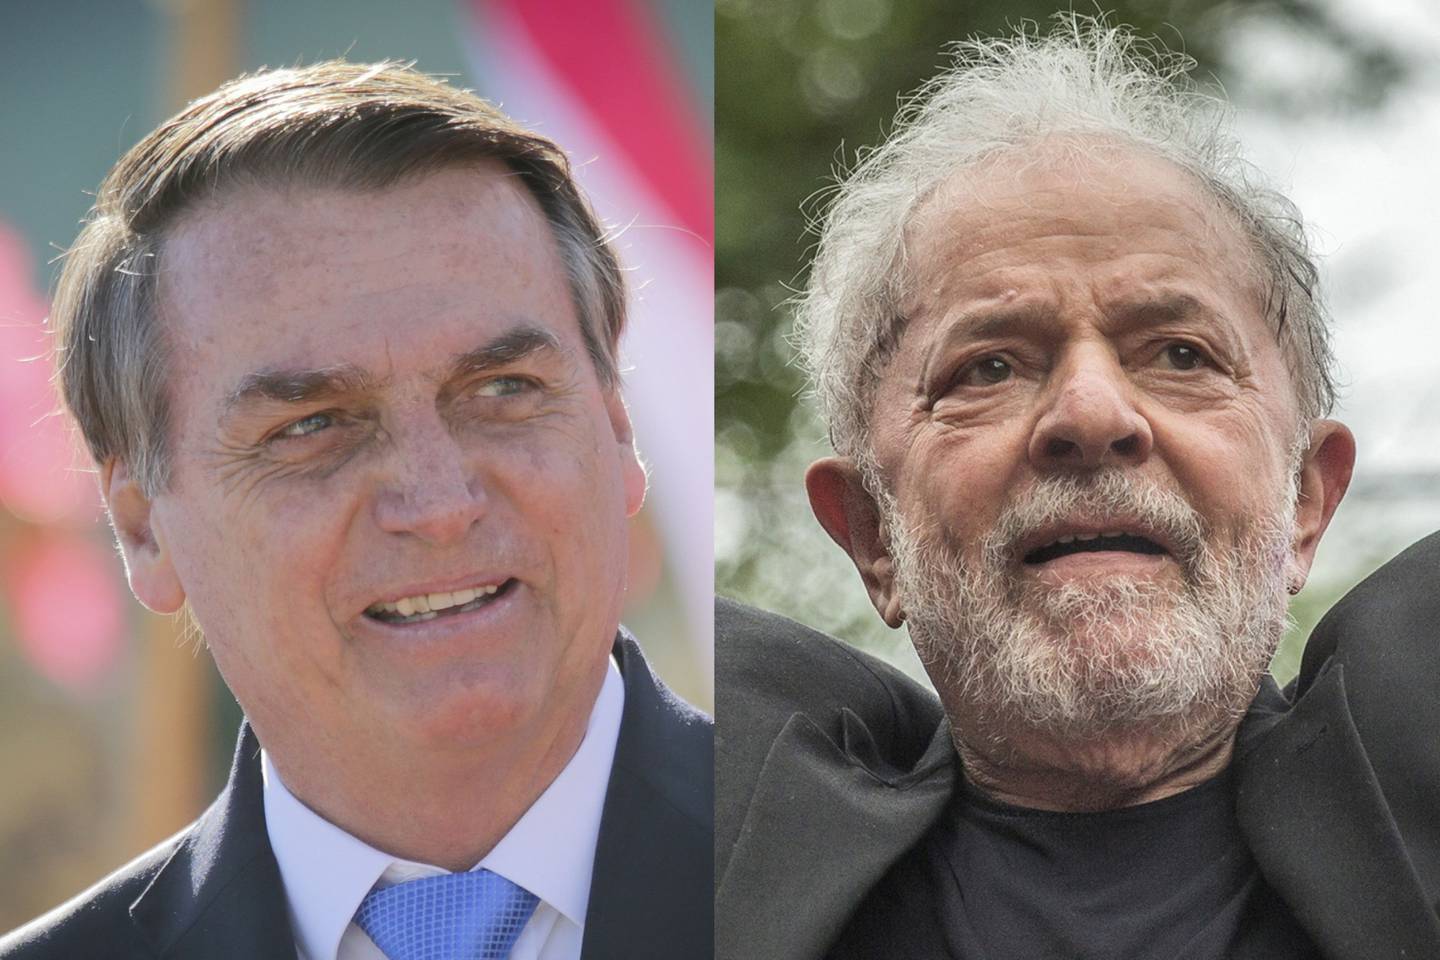 Jair Bolsonaro (left) is seeking reelection in October elections, but trails former president Luiz Inácio Lula da Silva (right) in the polls